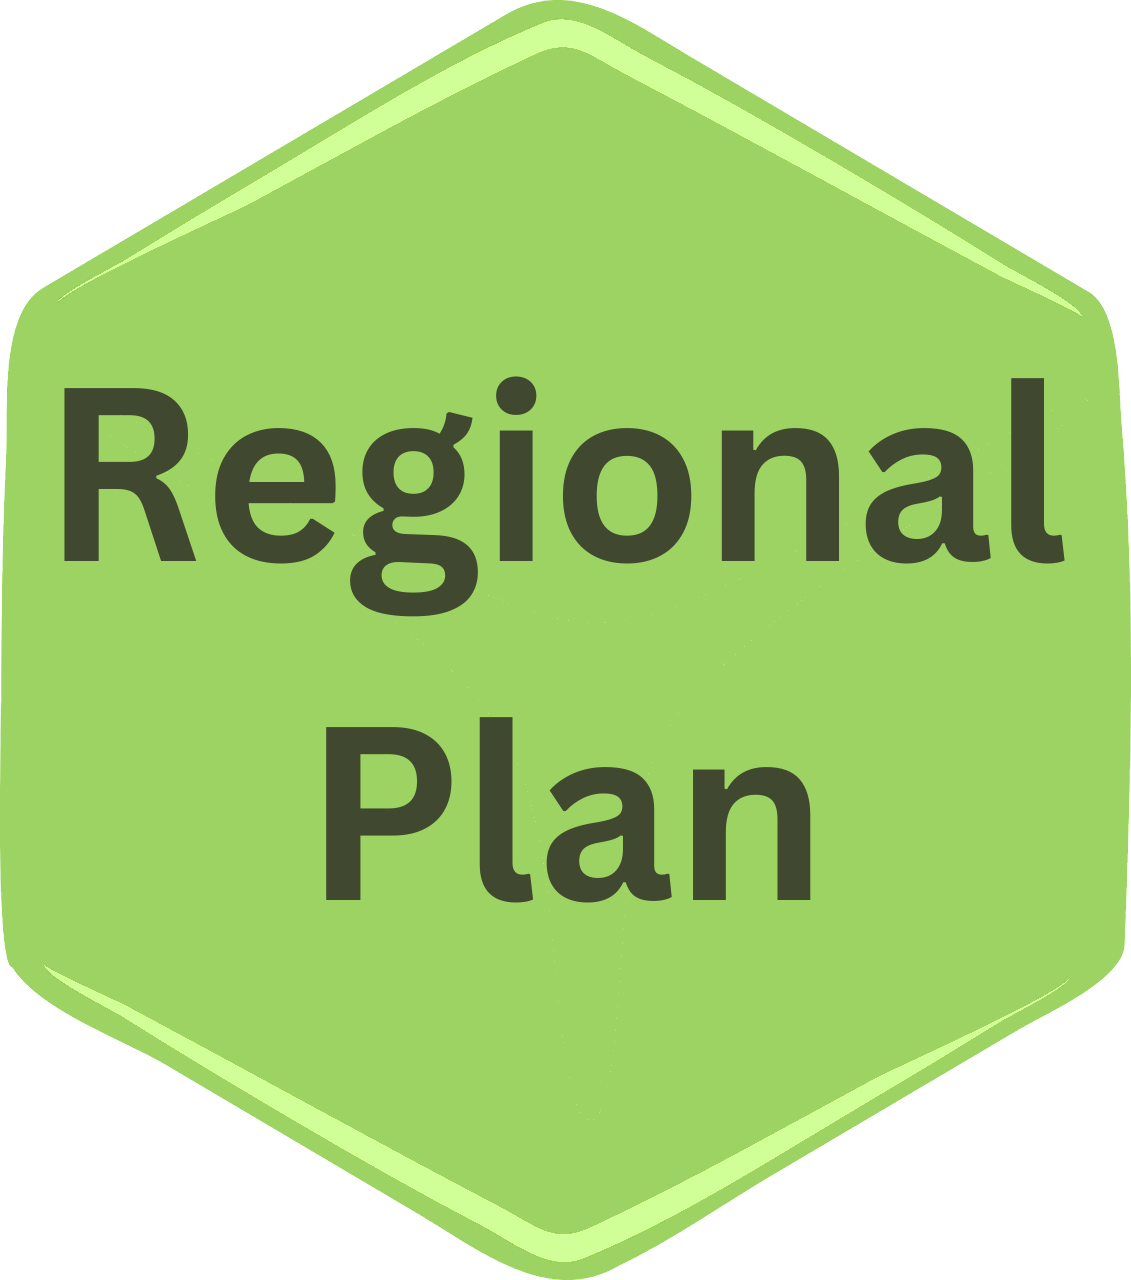 Regional plan redirect to PDF